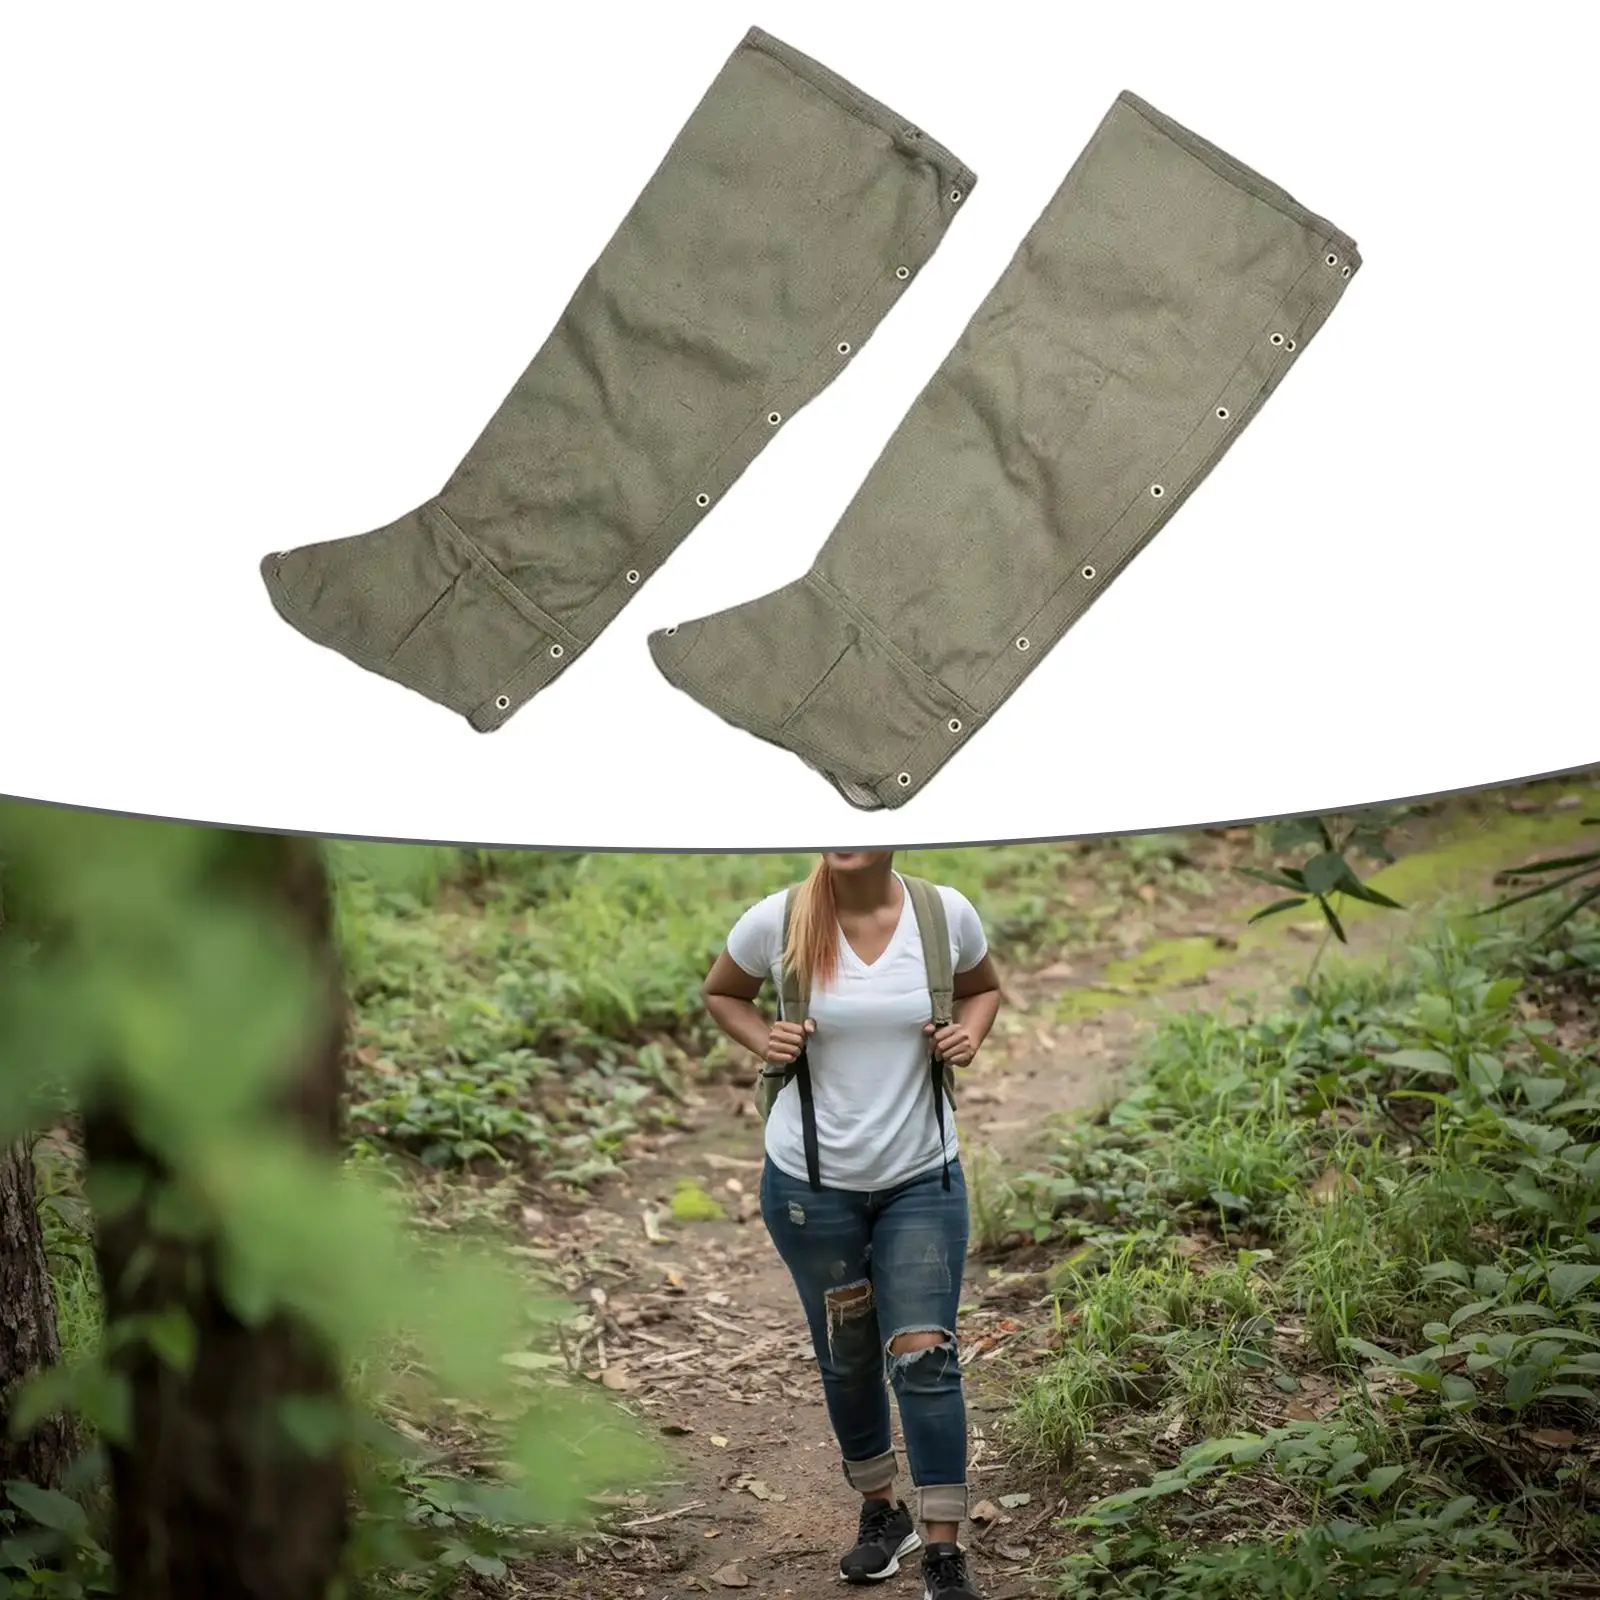 Leg Hiking Guard Anti Scratch Leg Protector for Outdoor Travel Trekking